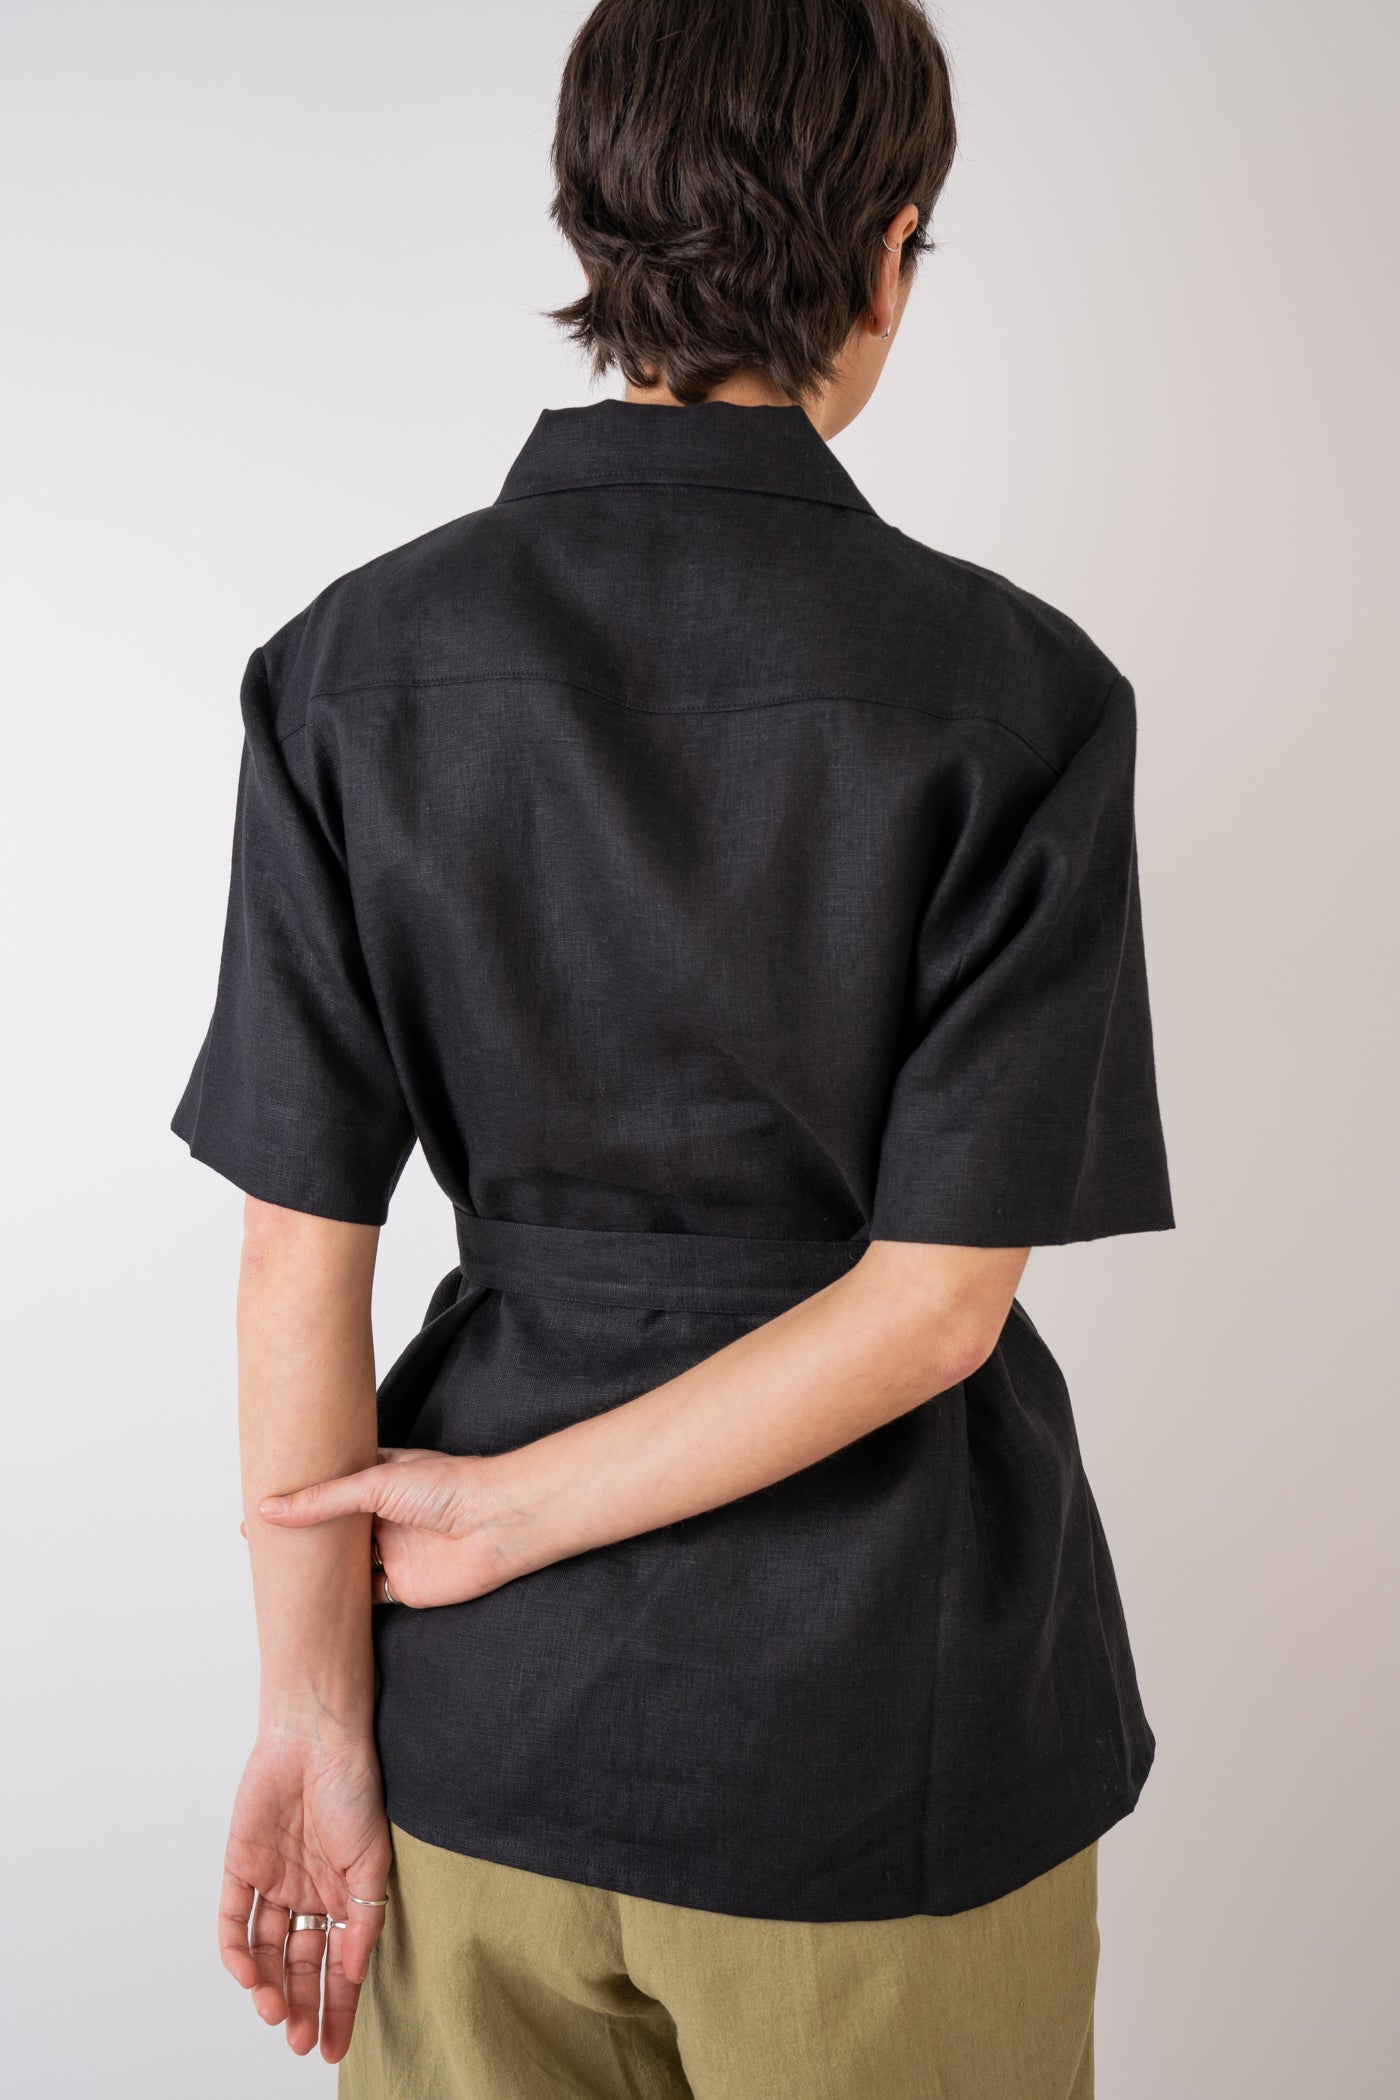 Xi Atelier Linen Cleo Shirt in black handmade in Glasgow